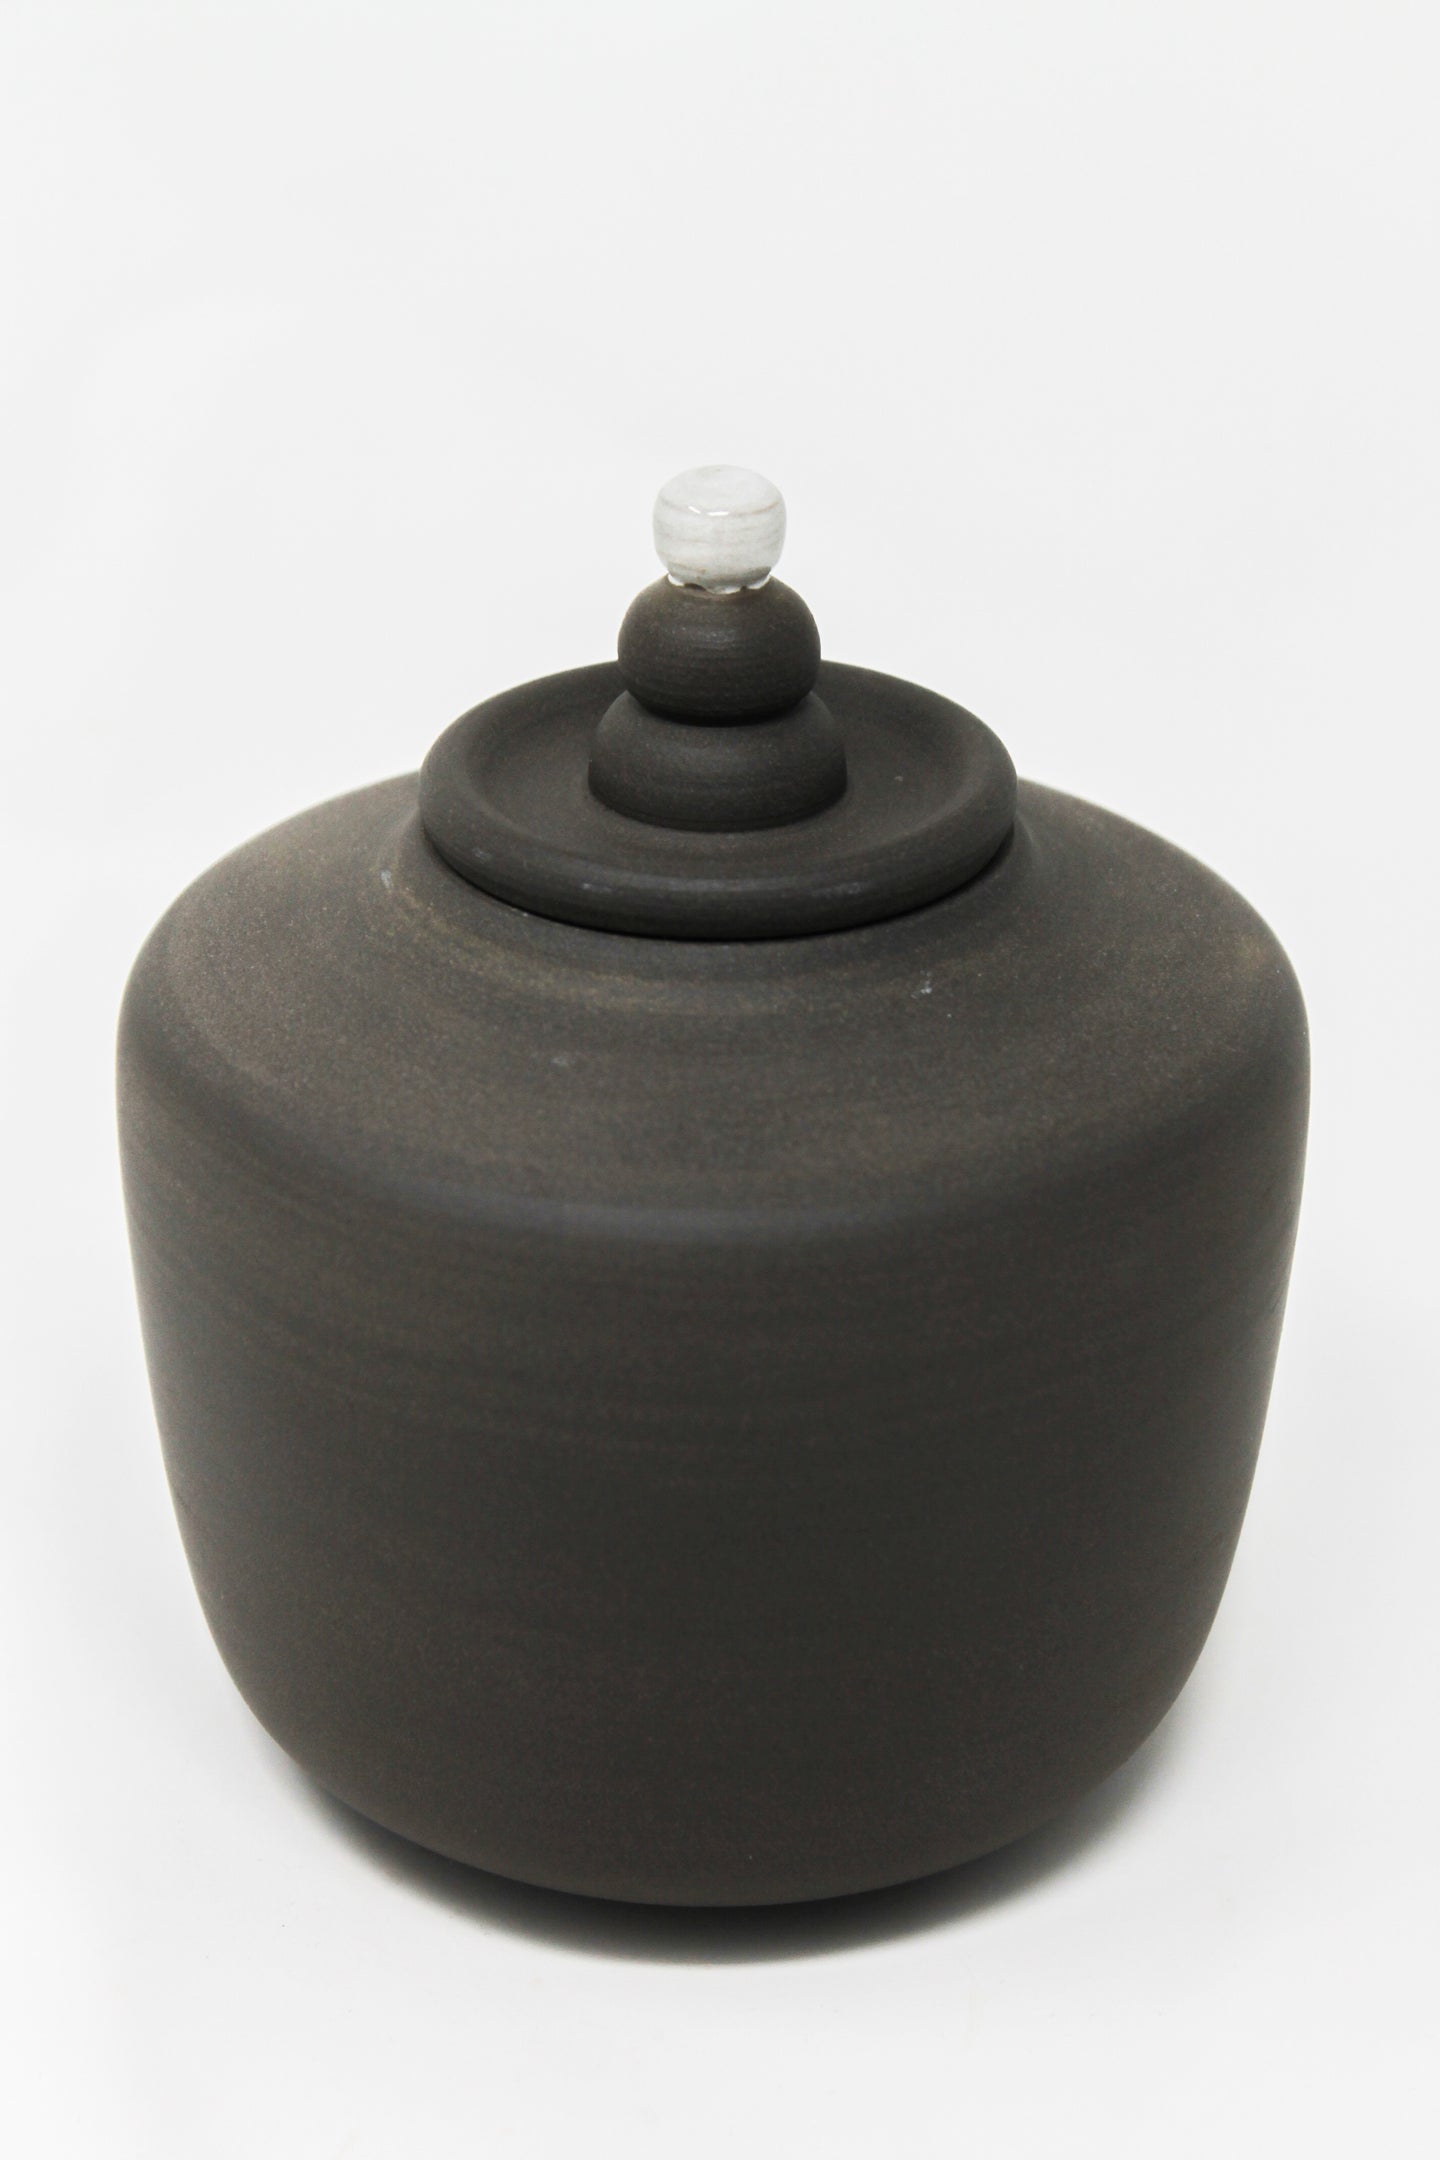 Tea jar 1 by ceramic artist Catharina Sommer